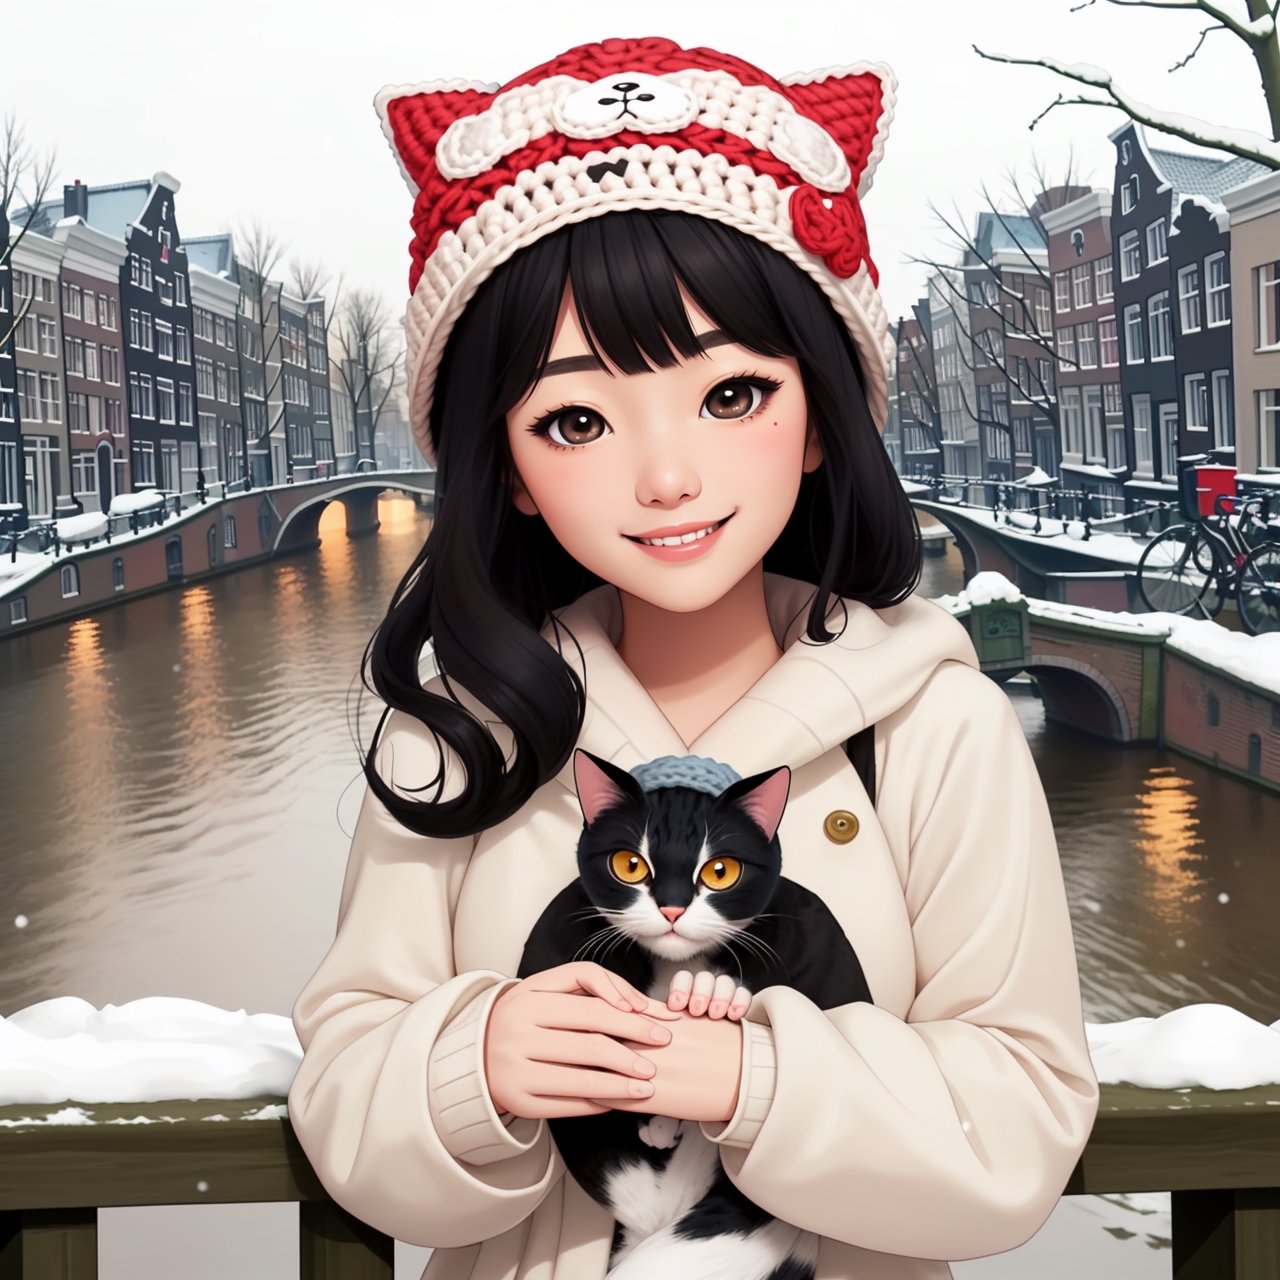 Asian girl  Snowing outdoor, wear Cat crochet hat, Smiling , Sweet, Large eyes, Wavy black Hair, Amsterdam, Oval Shape face